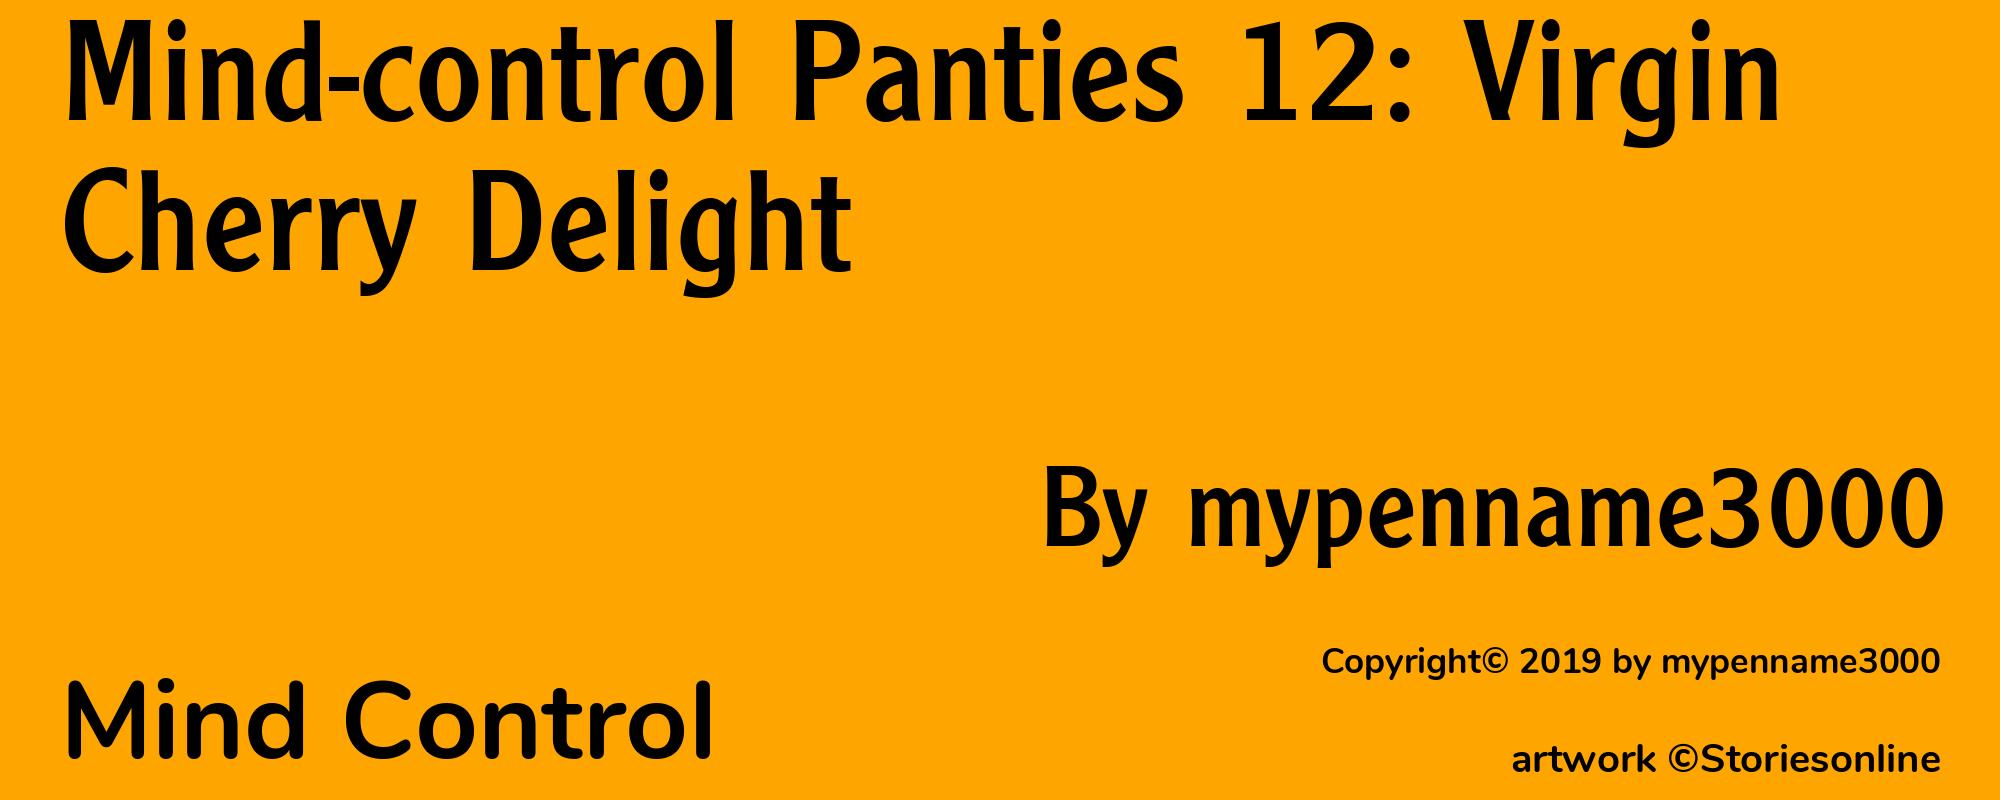 Mind-control Panties 12: Virgin Cherry Delight - Cover